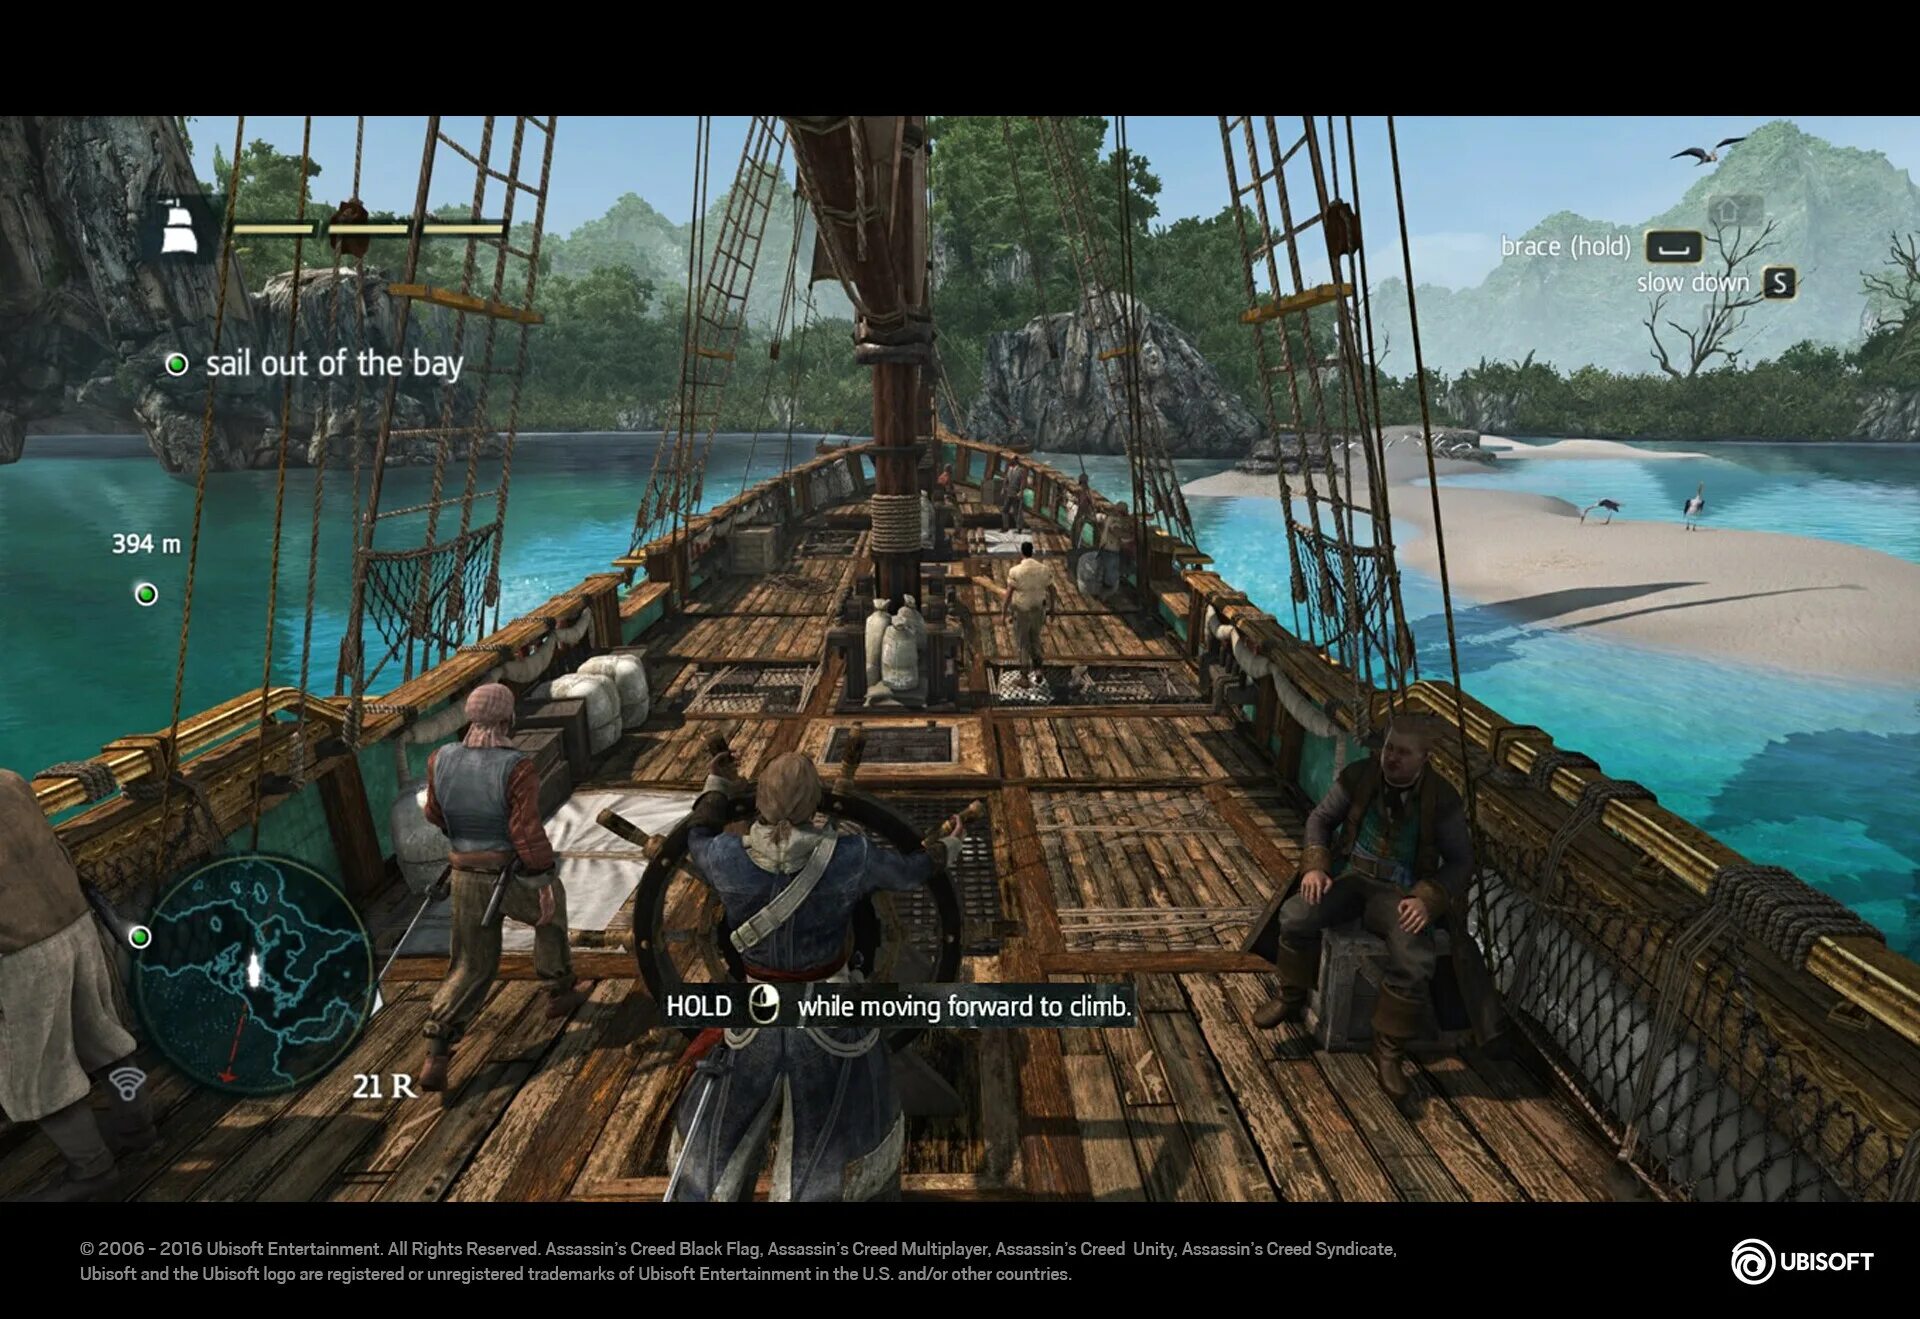 Assassin's Creed 4 Black Flag геймплей. Assassin’s Creed IV: Black Flag – 2013. Ассасин Крид 4 Блэк флаг геймплей. Assassin’s Creed IV: Black Flag PC. Игра пираты с открытым миром